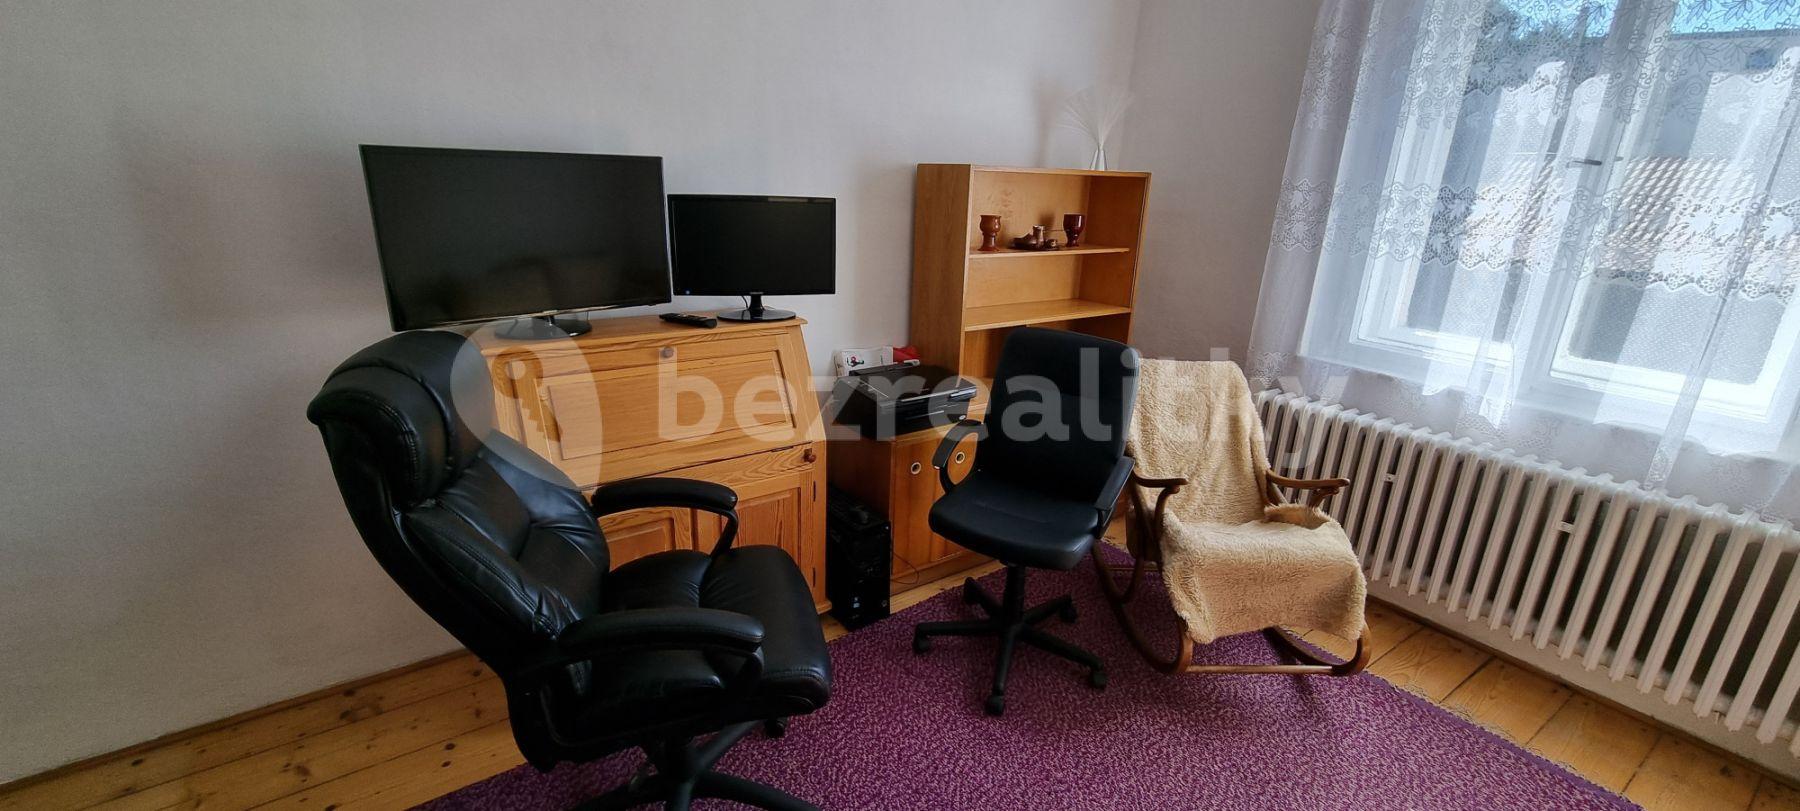 1 bedroom flat to rent, 32 m², Kozomínská, Prague, Prague